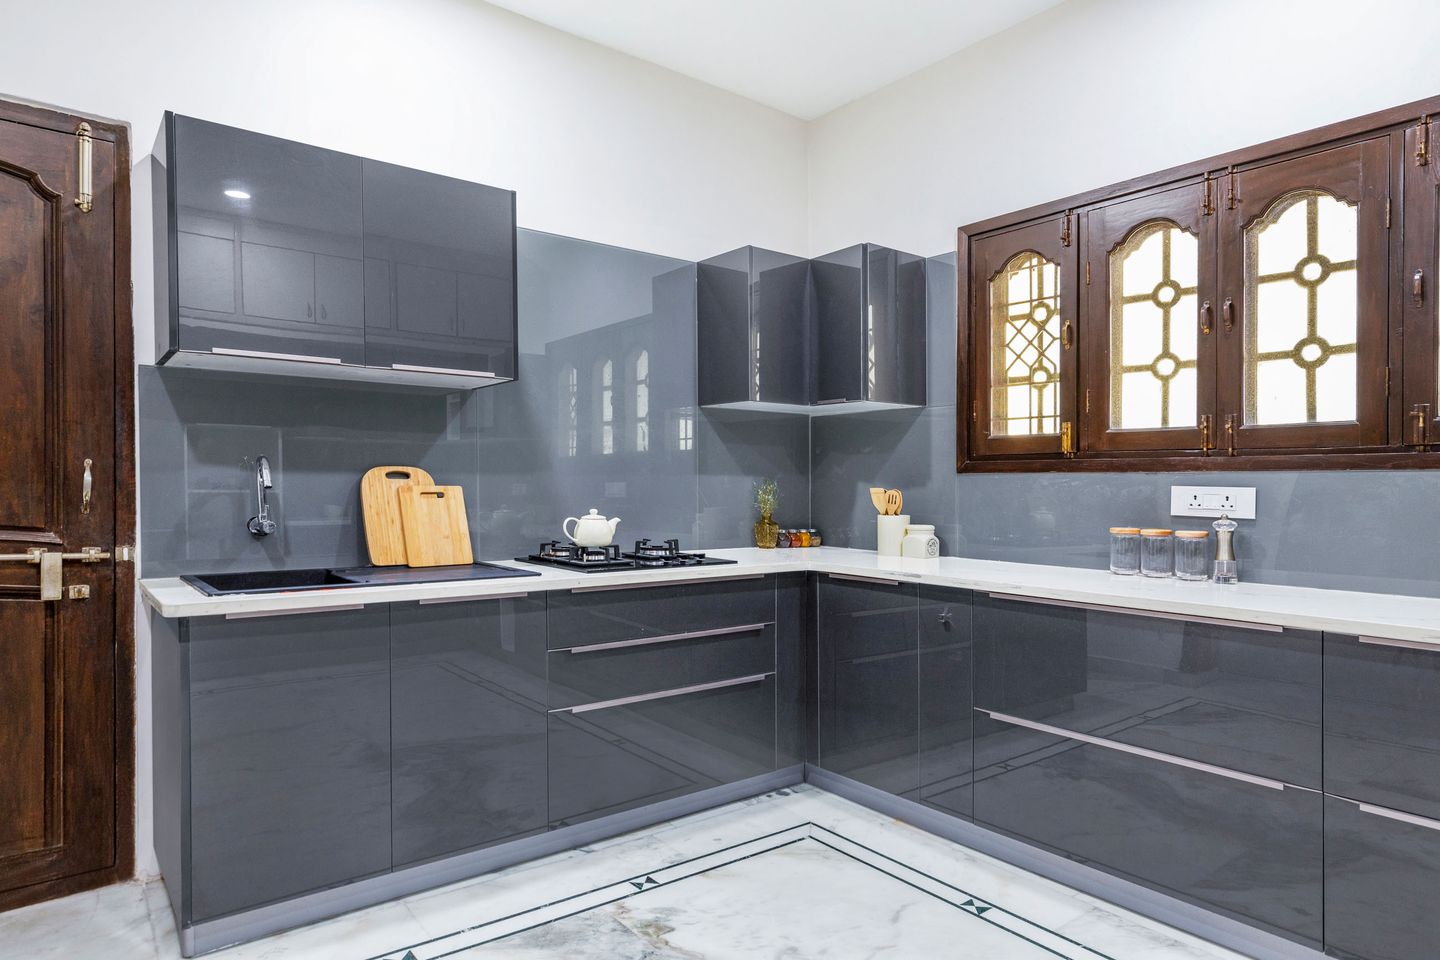 U Shaped Modular Kitchen Design With Dark Grey And Metallic White Cabinetry - Livspace